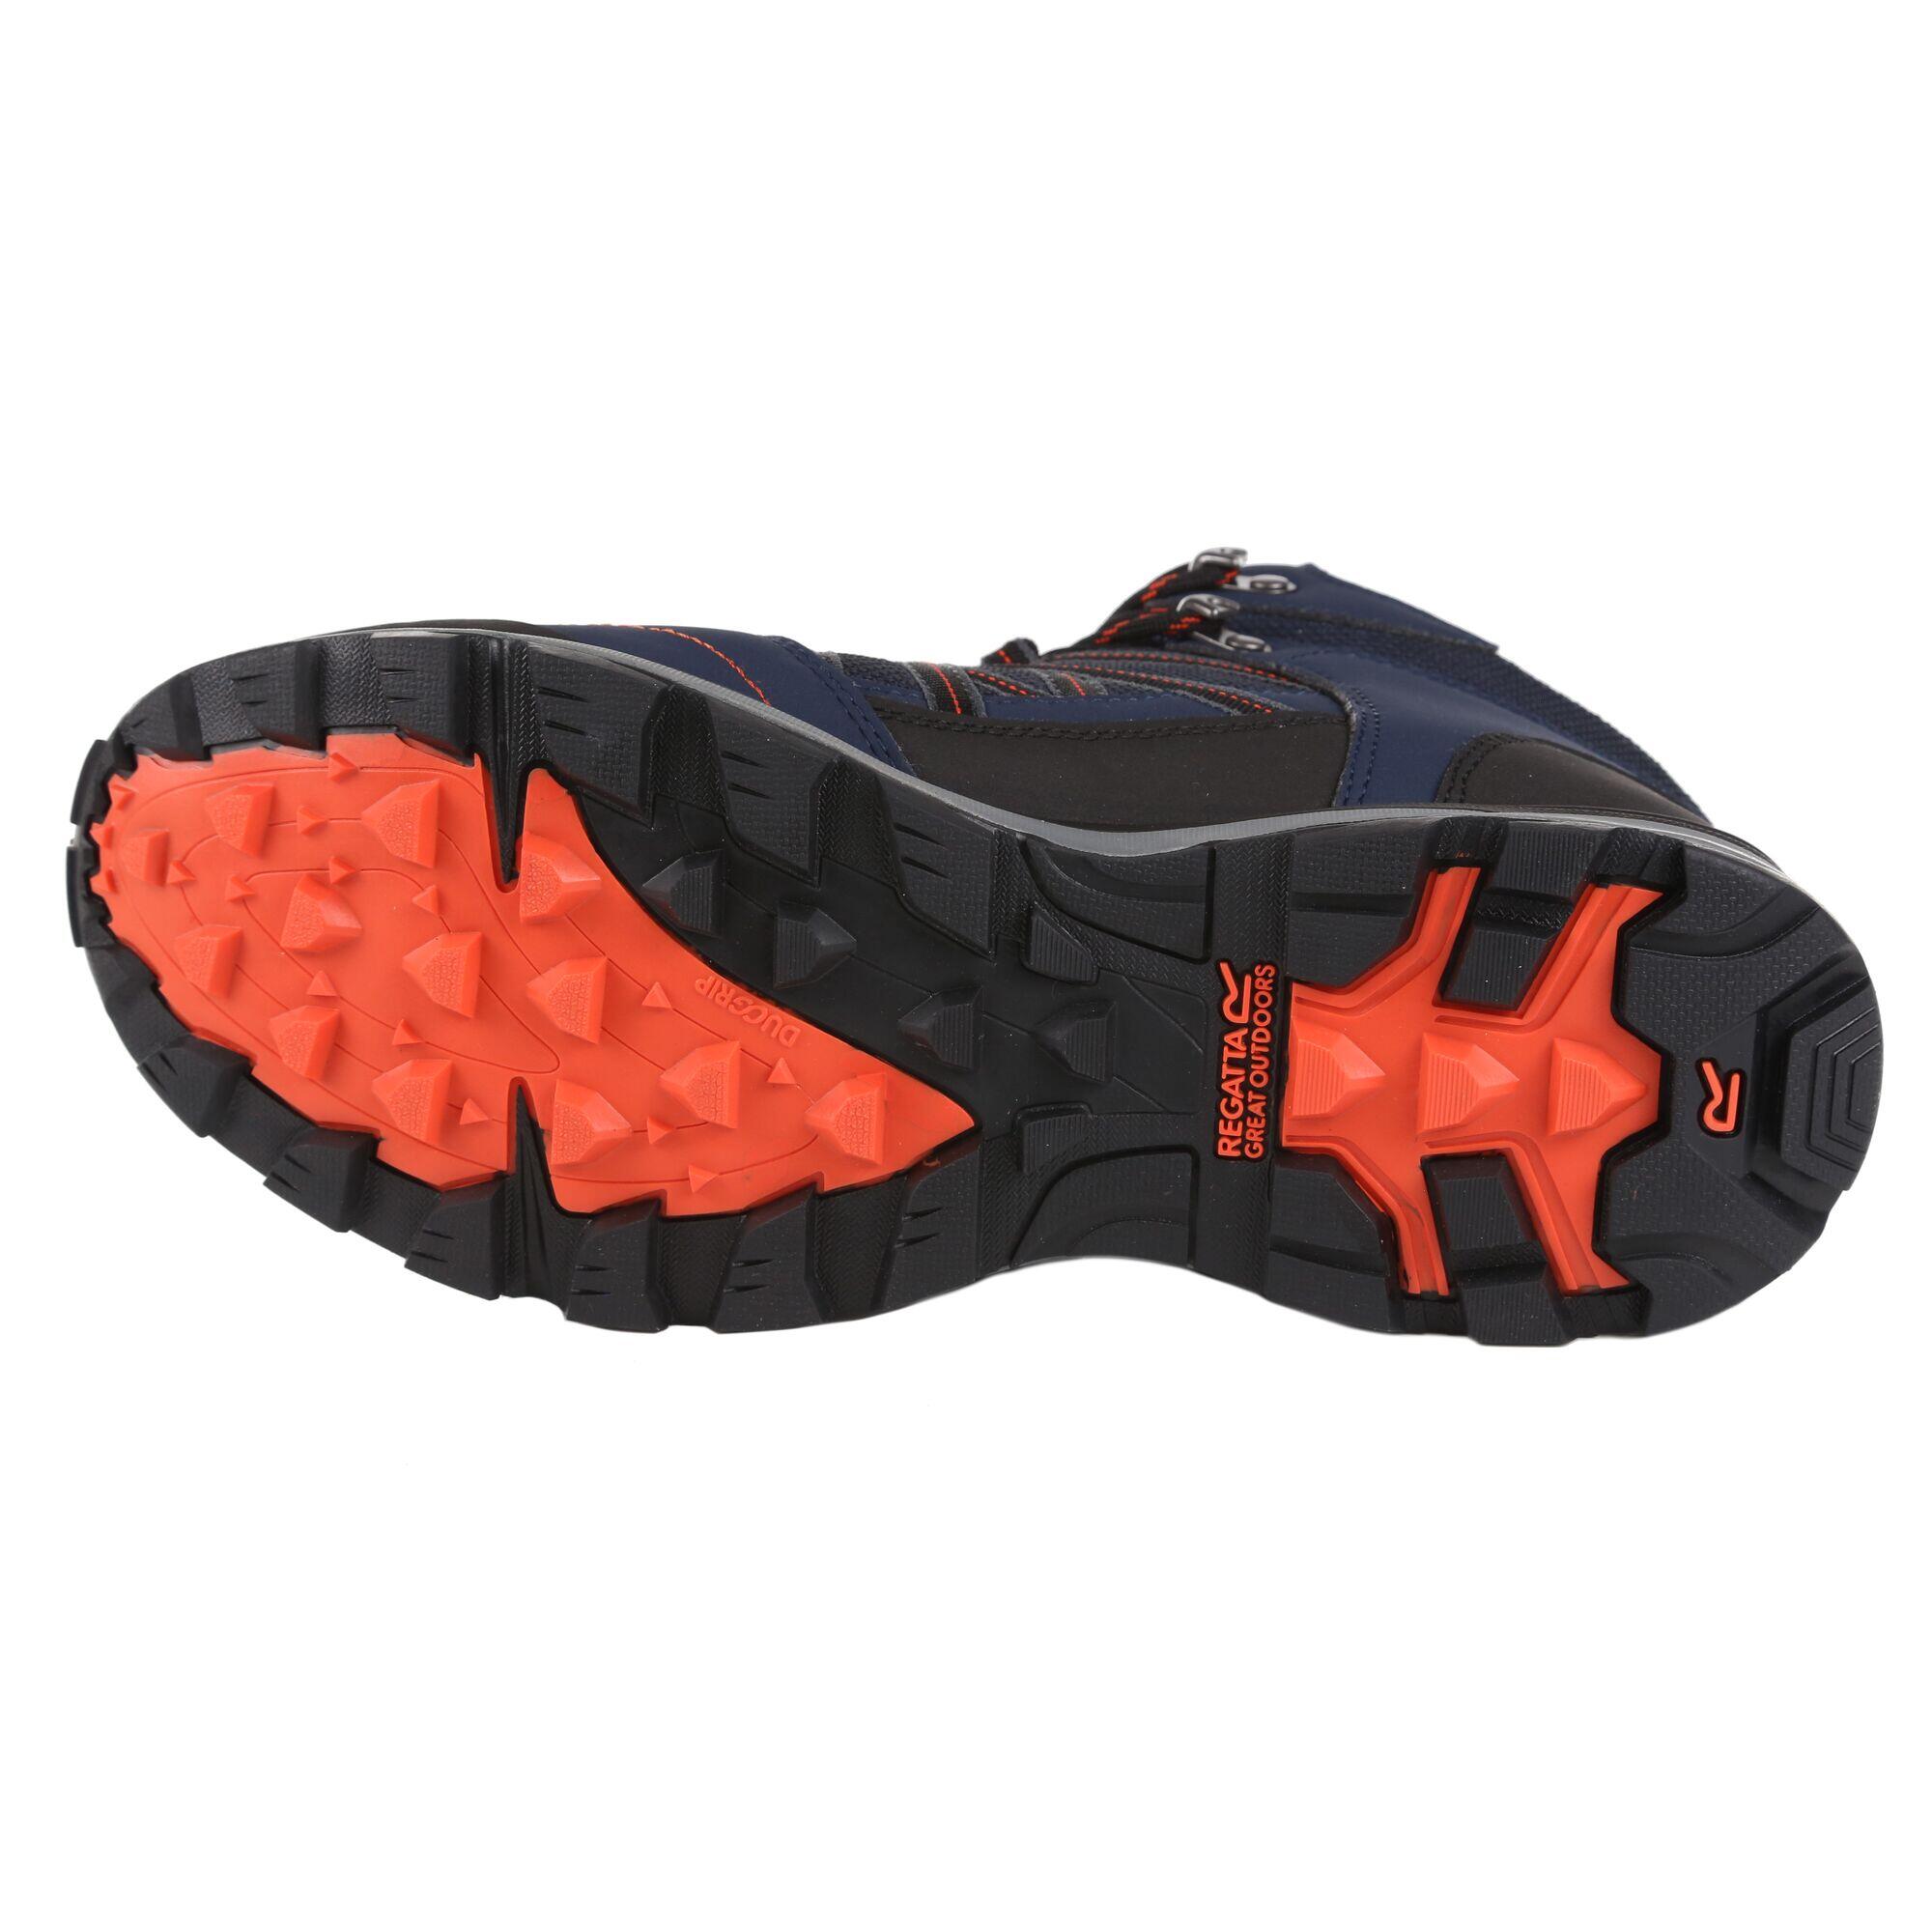 Samaris II Men's Hiking Boots - Navy/Orange 5/5